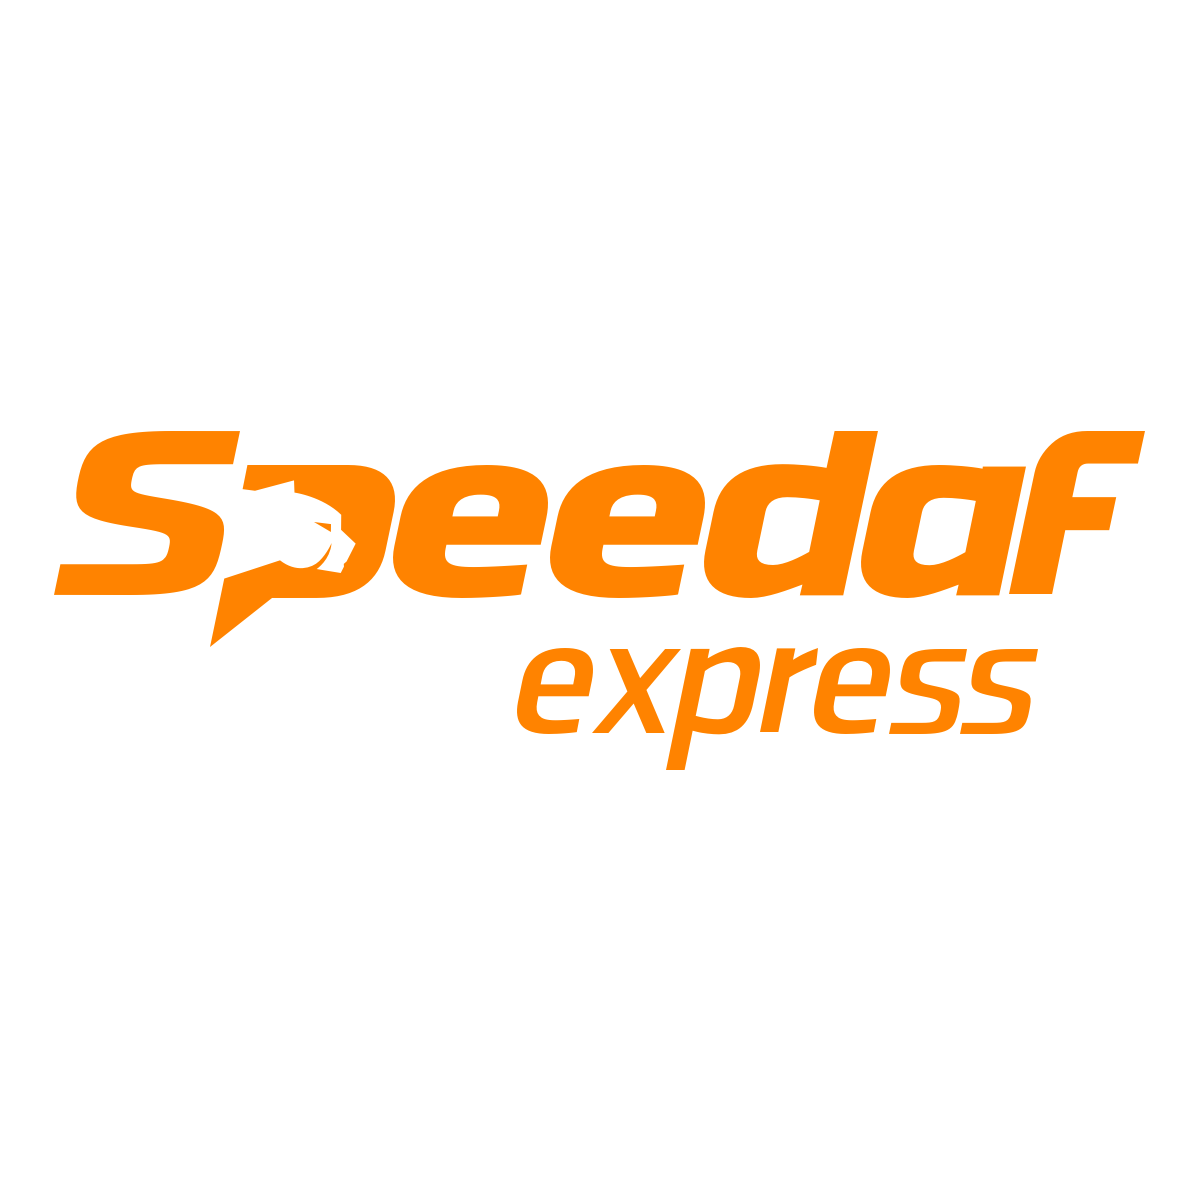 Speedaf express